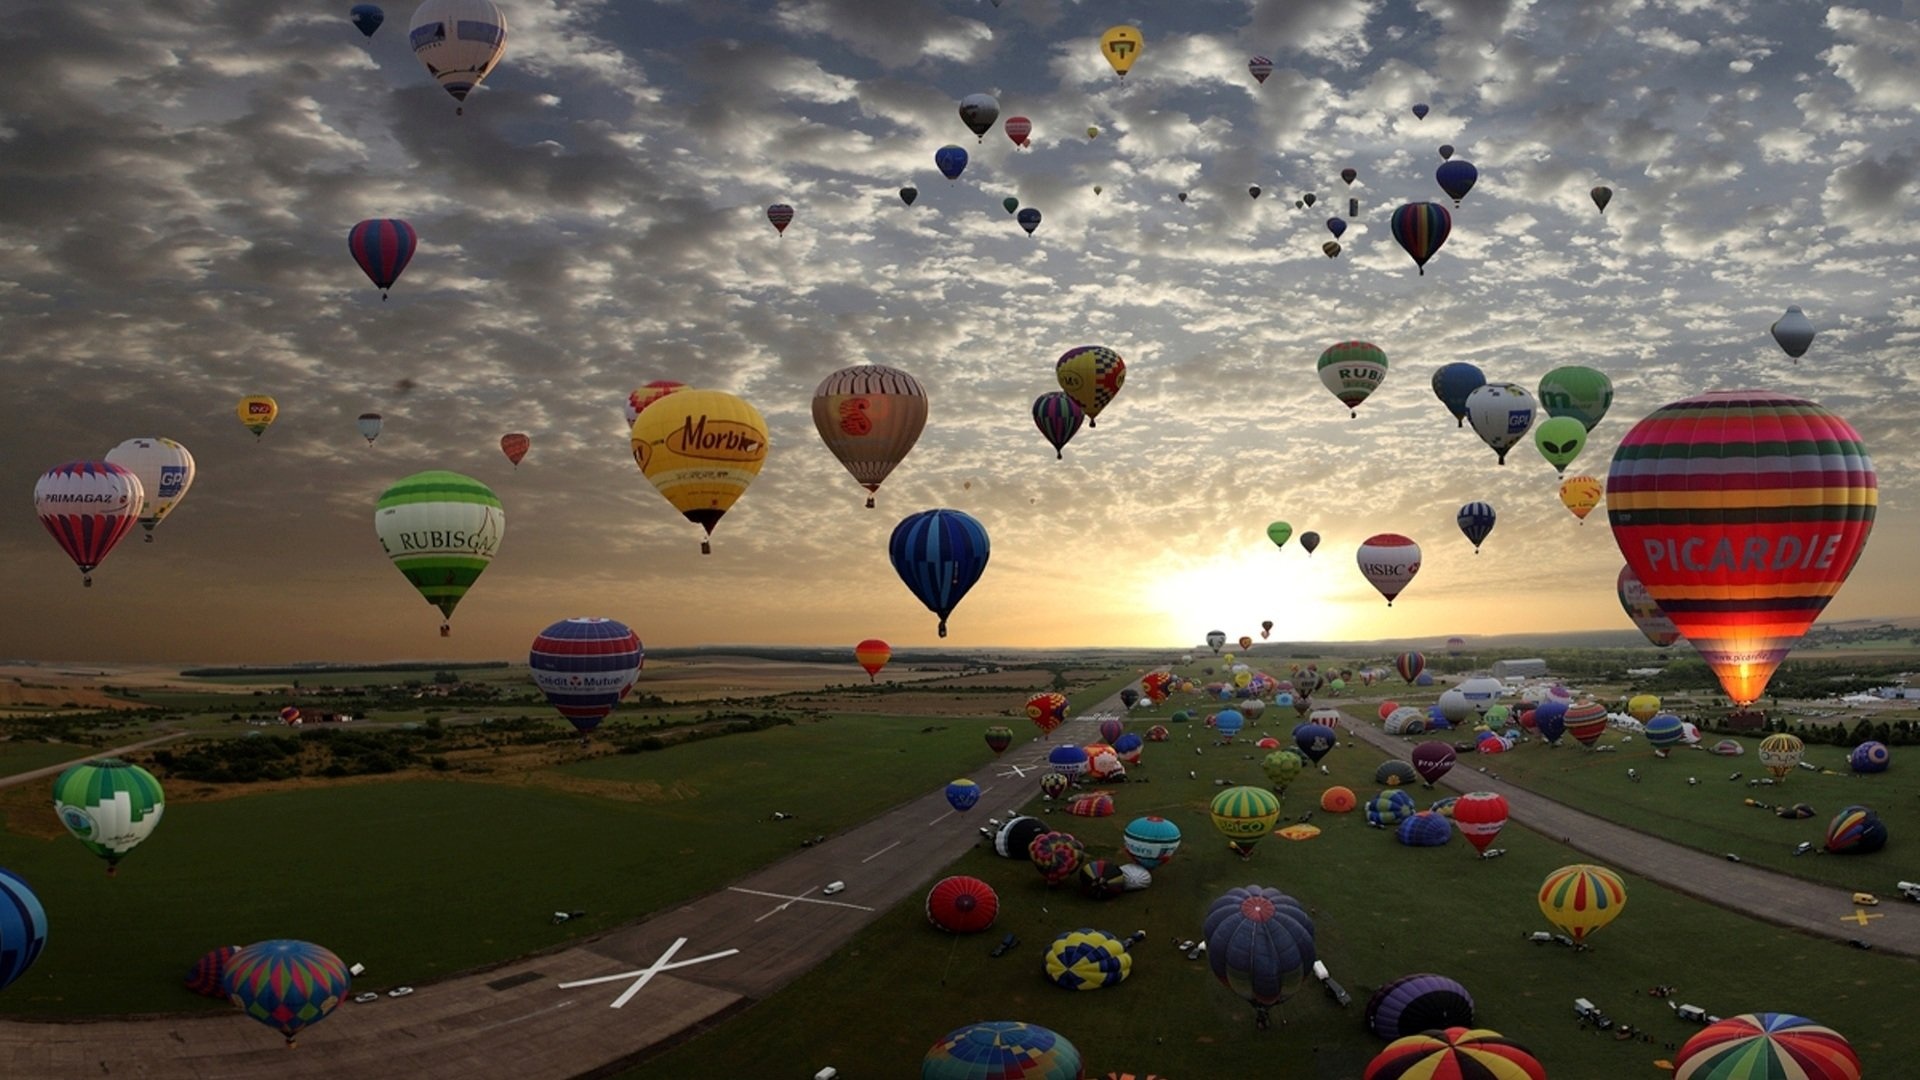 Air Sports: Albuquerque International Balloon Fiesta in the evening hours, Picardie, Rubis, Primagaz. 1920x1080 Full HD Wallpaper.